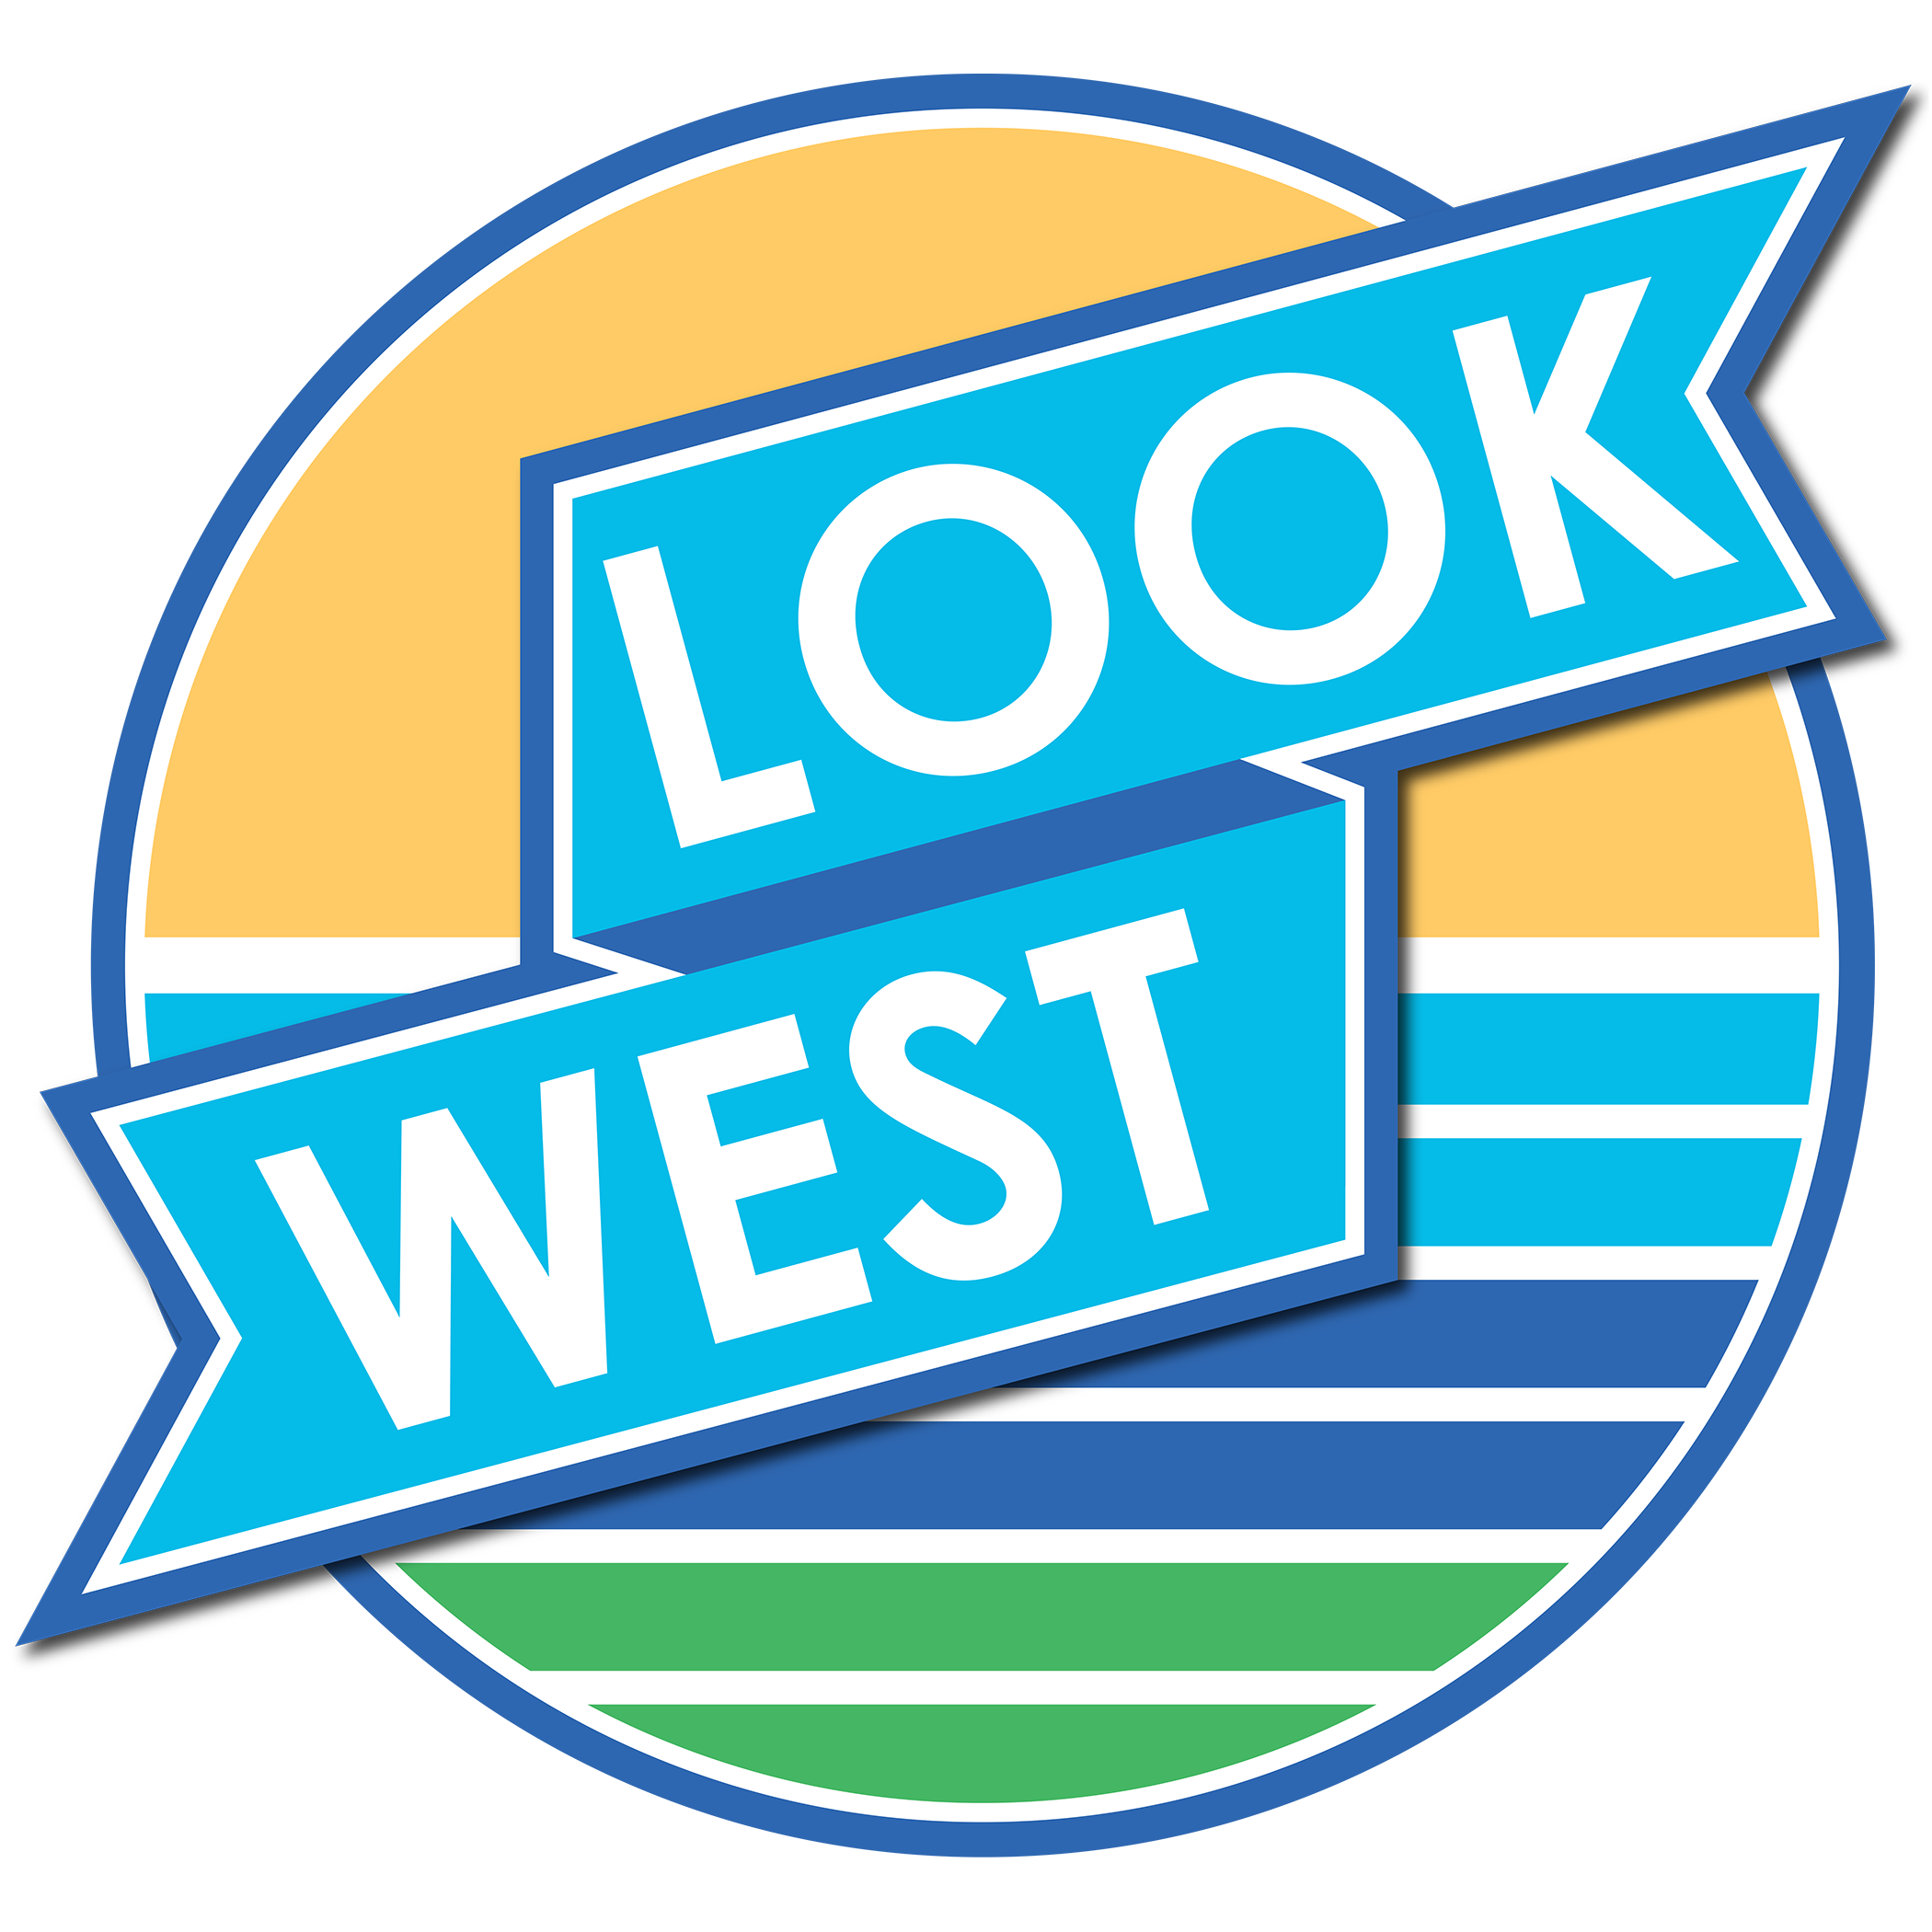 Look West Logo